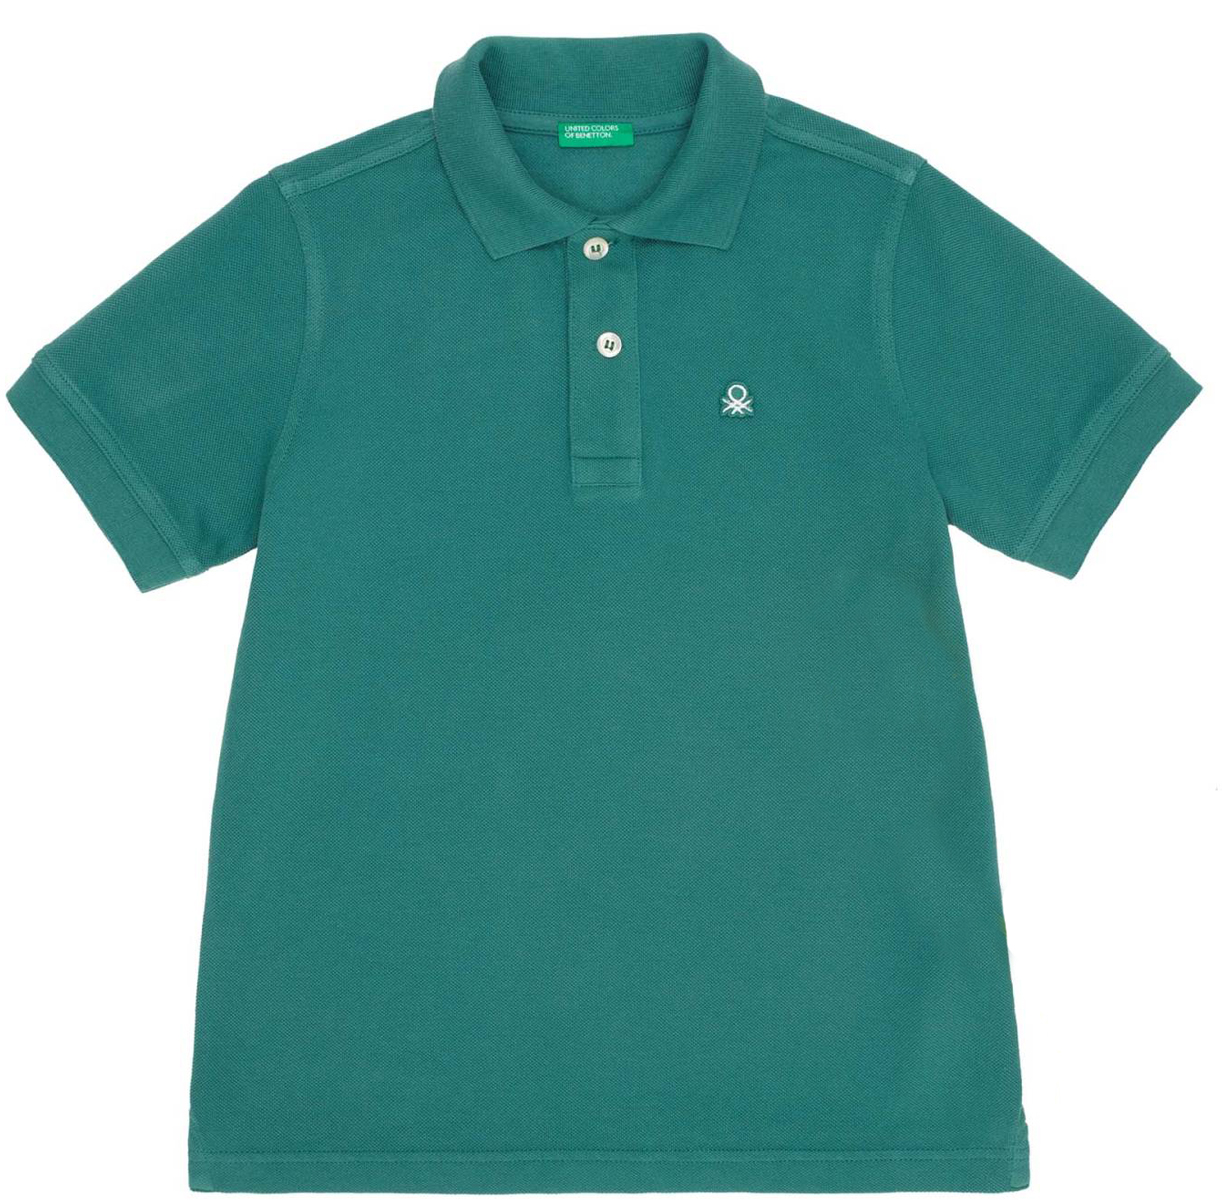 Поло для мальчика United Colors of Benetton, цвет: зеленый. 3089C3091_1N0. Размер 90